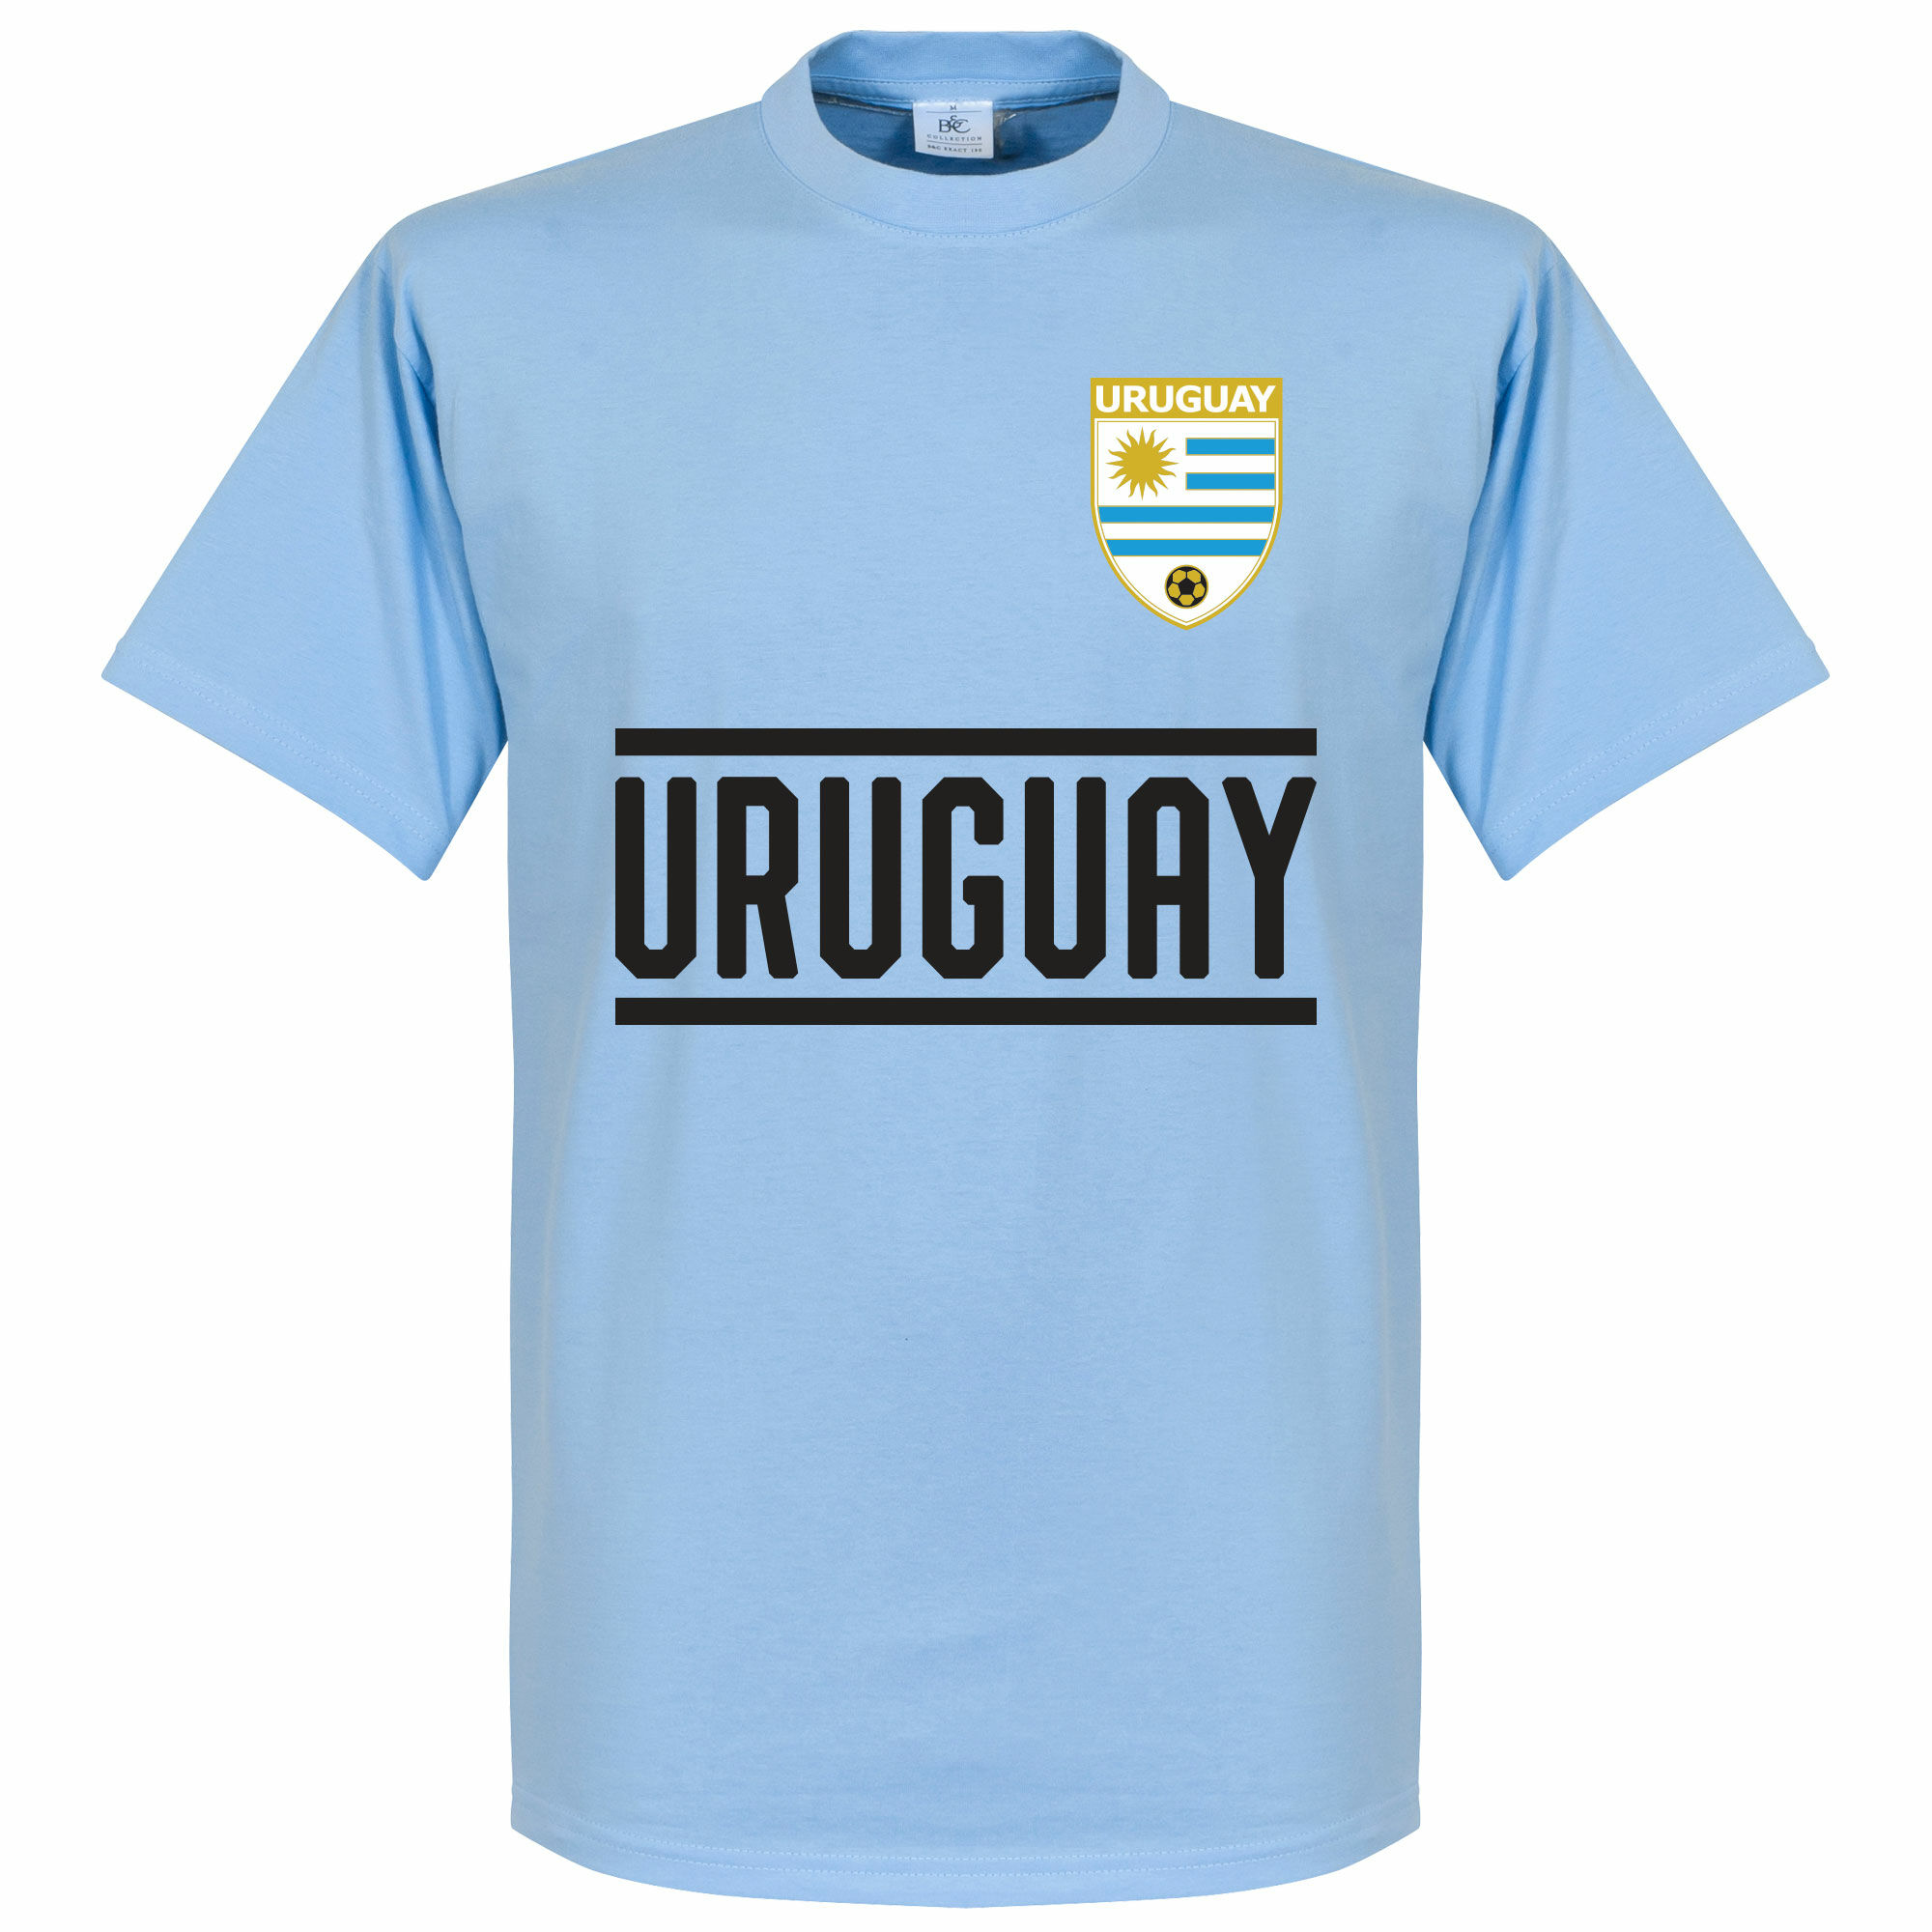 Uruguay - Tričko - modré